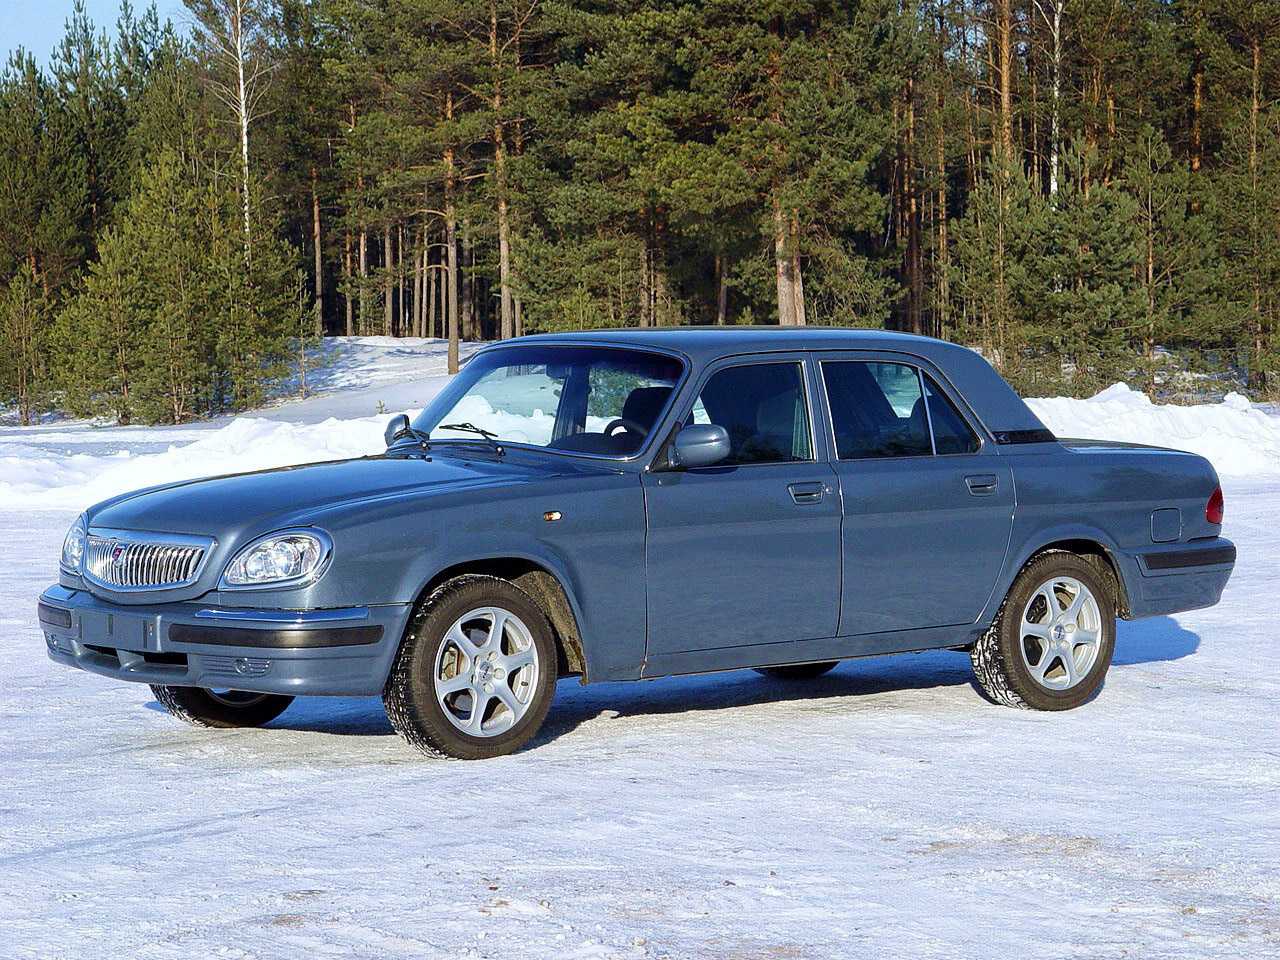 Mad 4 Wheels - 2004 Gaz 31105 Volga - Best quality free high ...